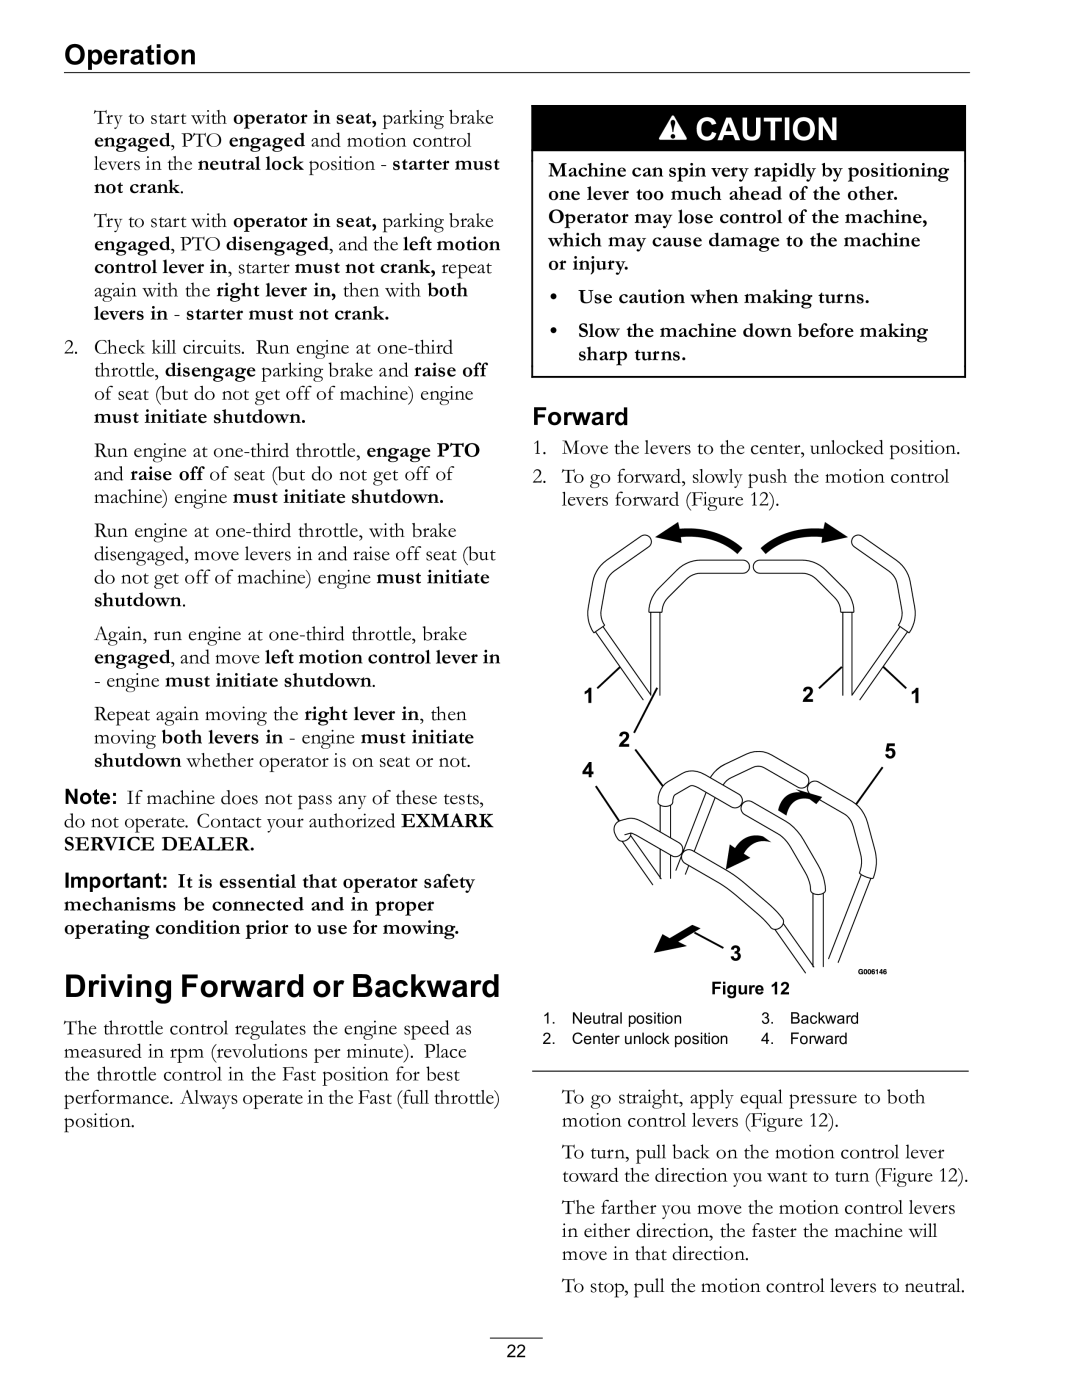 Exmark Lawn Mower manual Driving Forward or Backward 